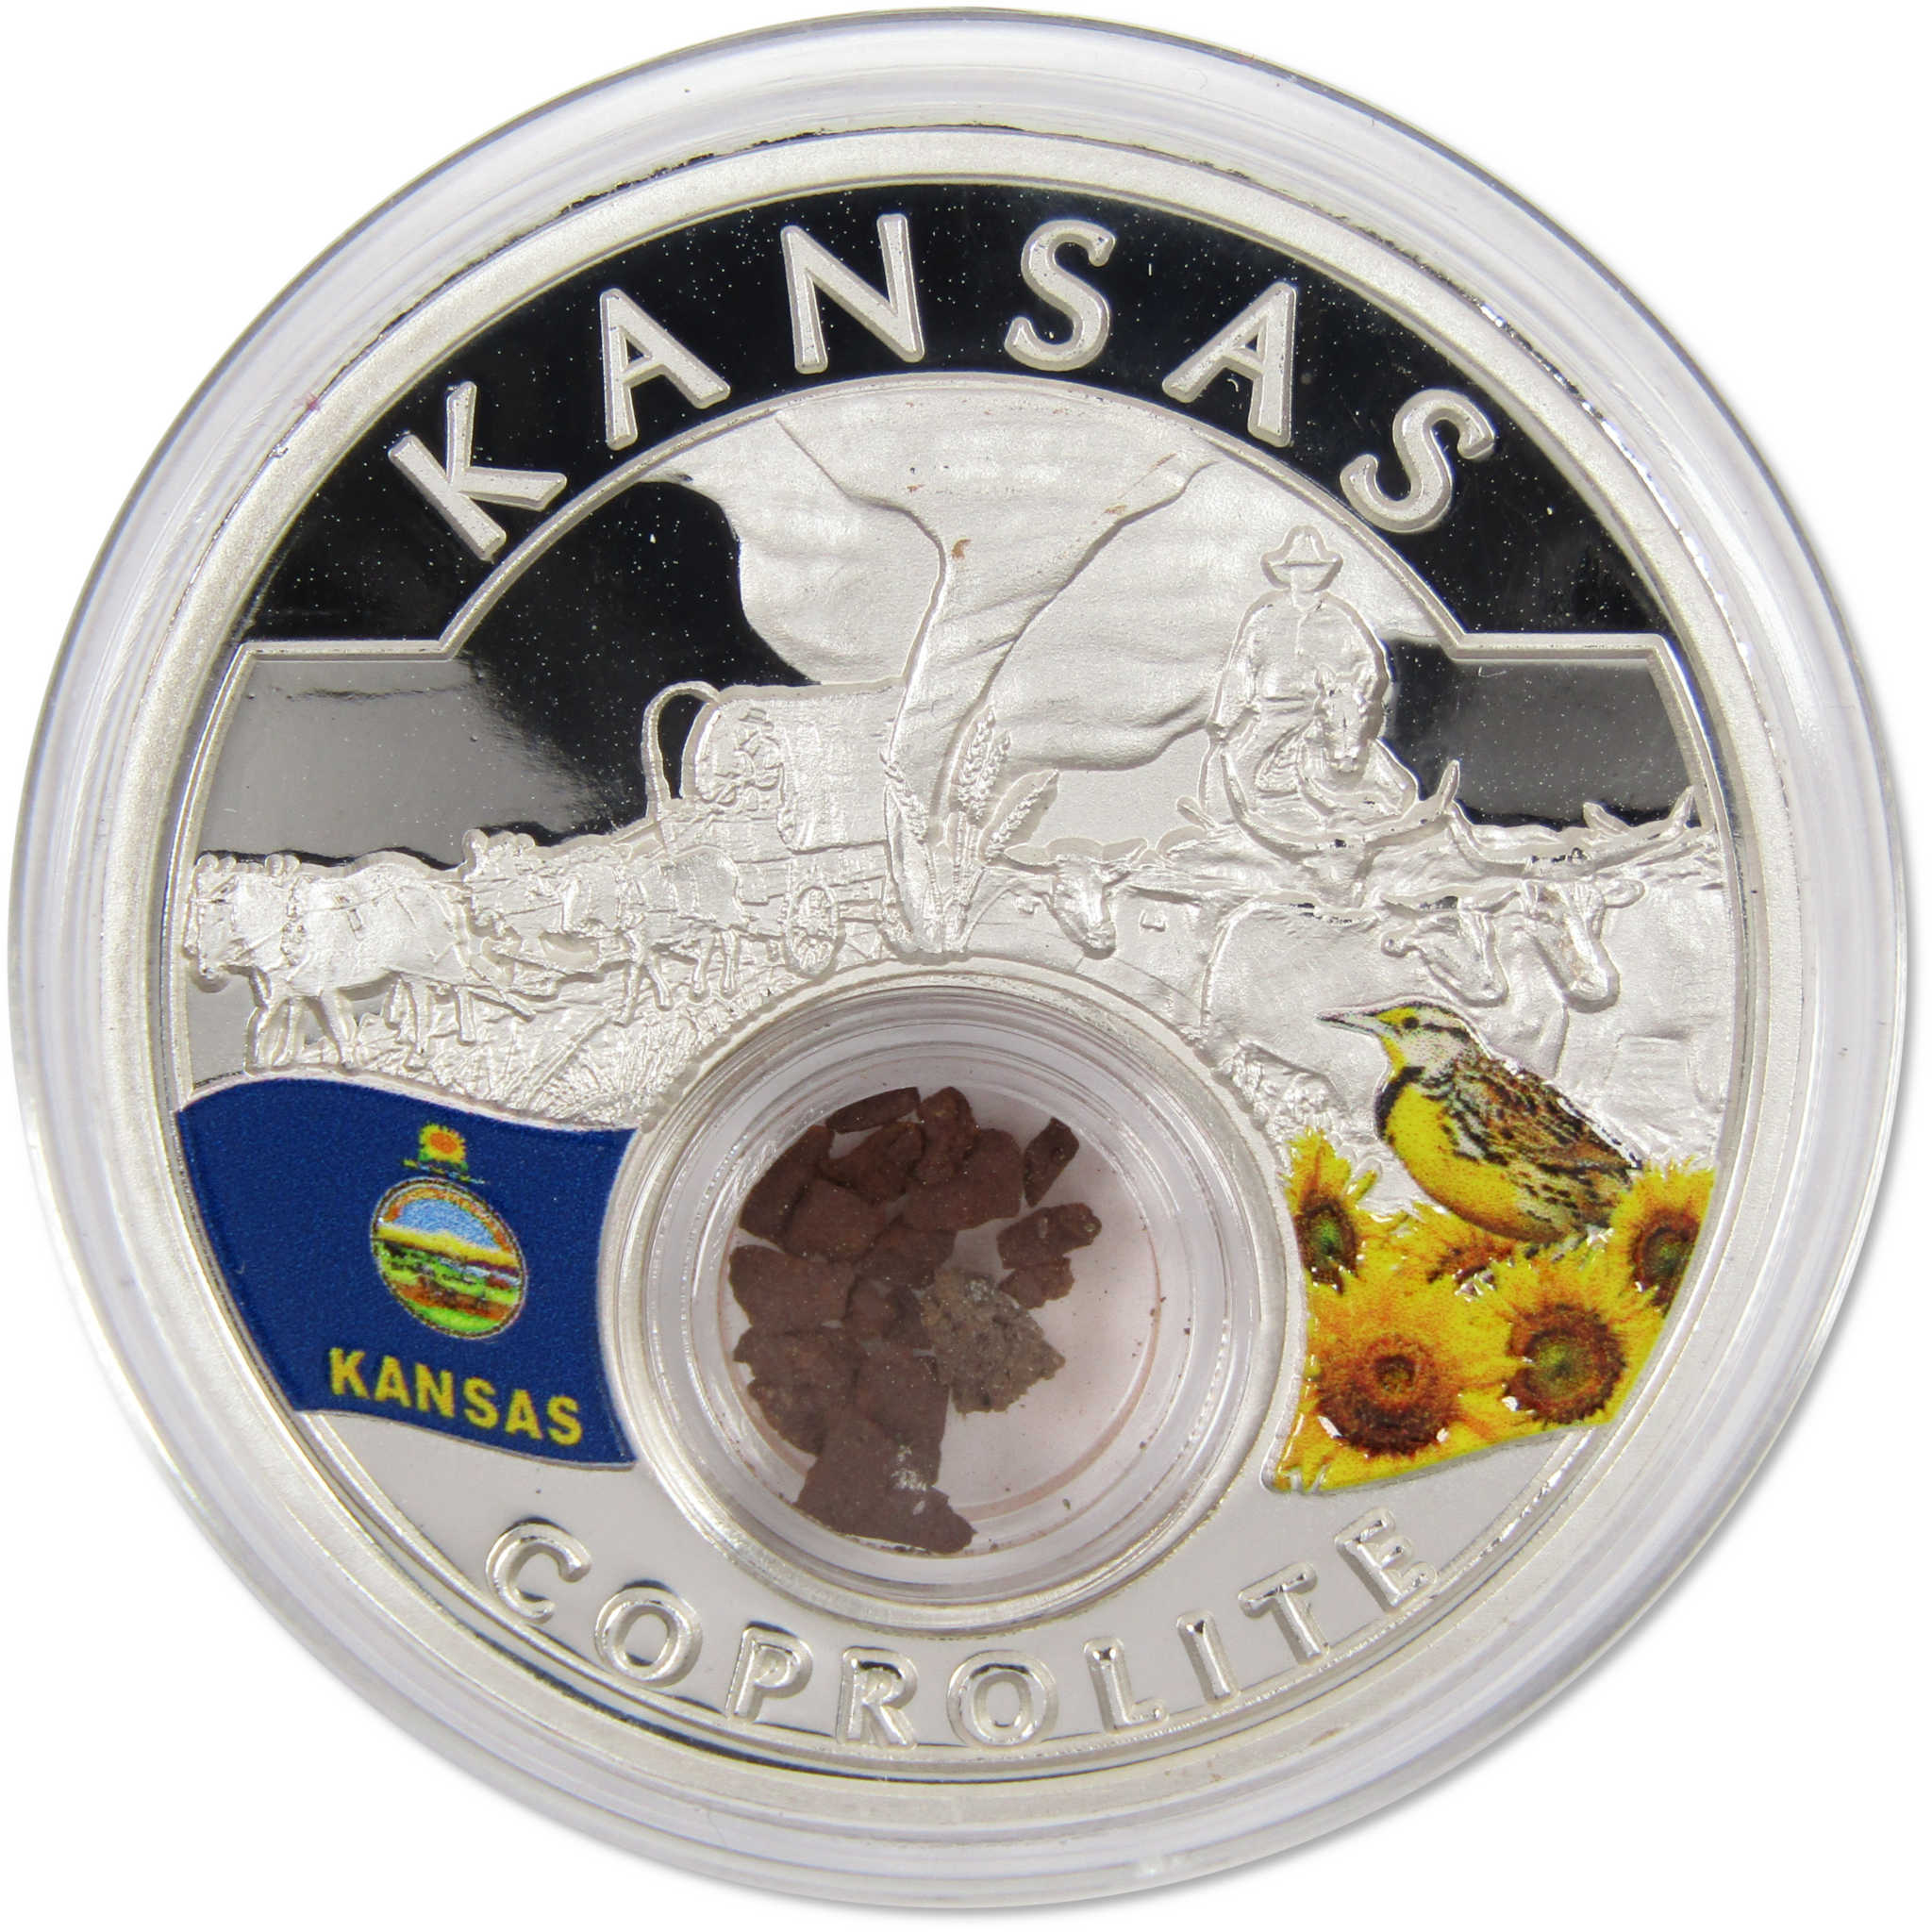 2021 Native American Mesa Grande Kansas Coprolite 1 oz .999 Silver $10 Proof